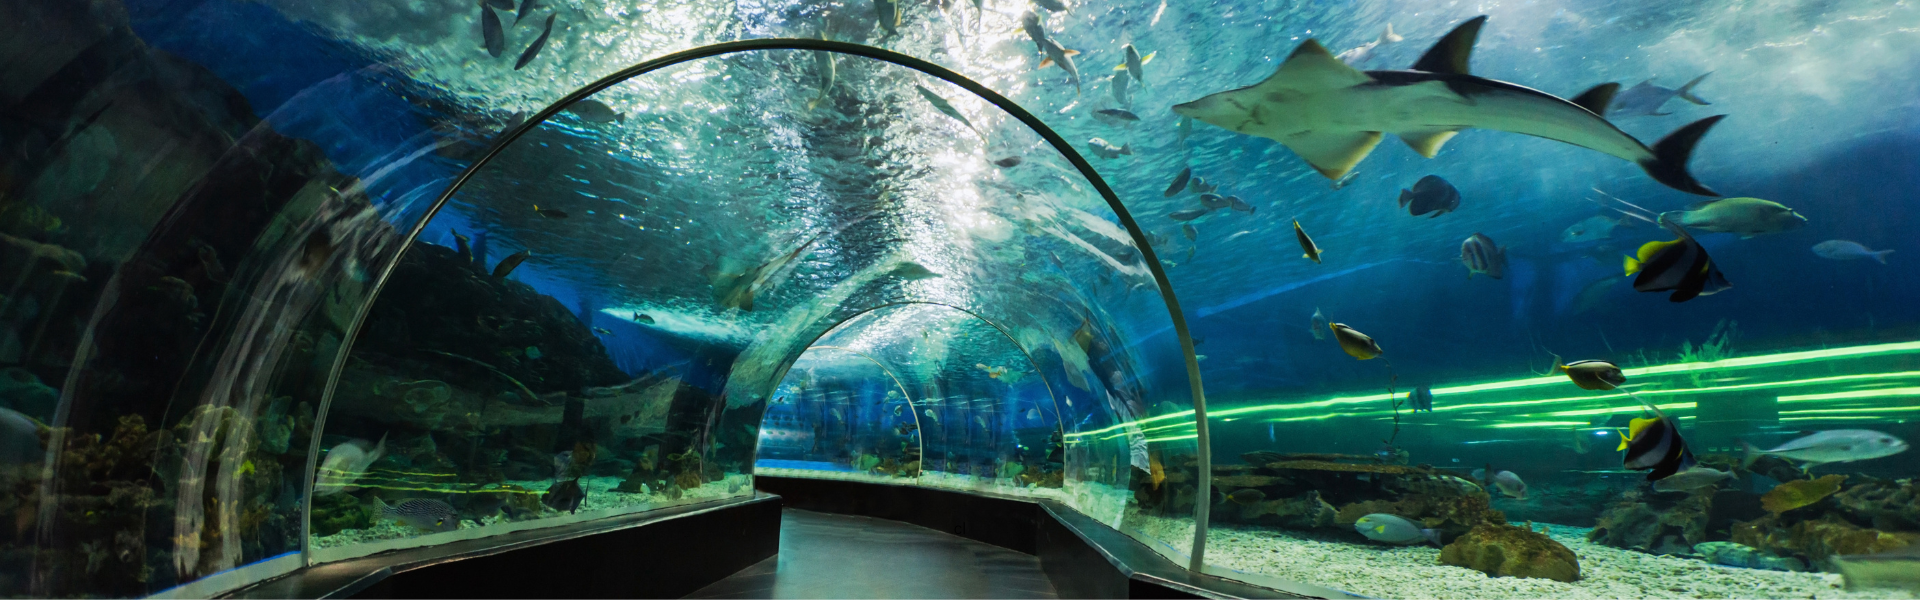 A shark passes over a tunnel in an aquarium 